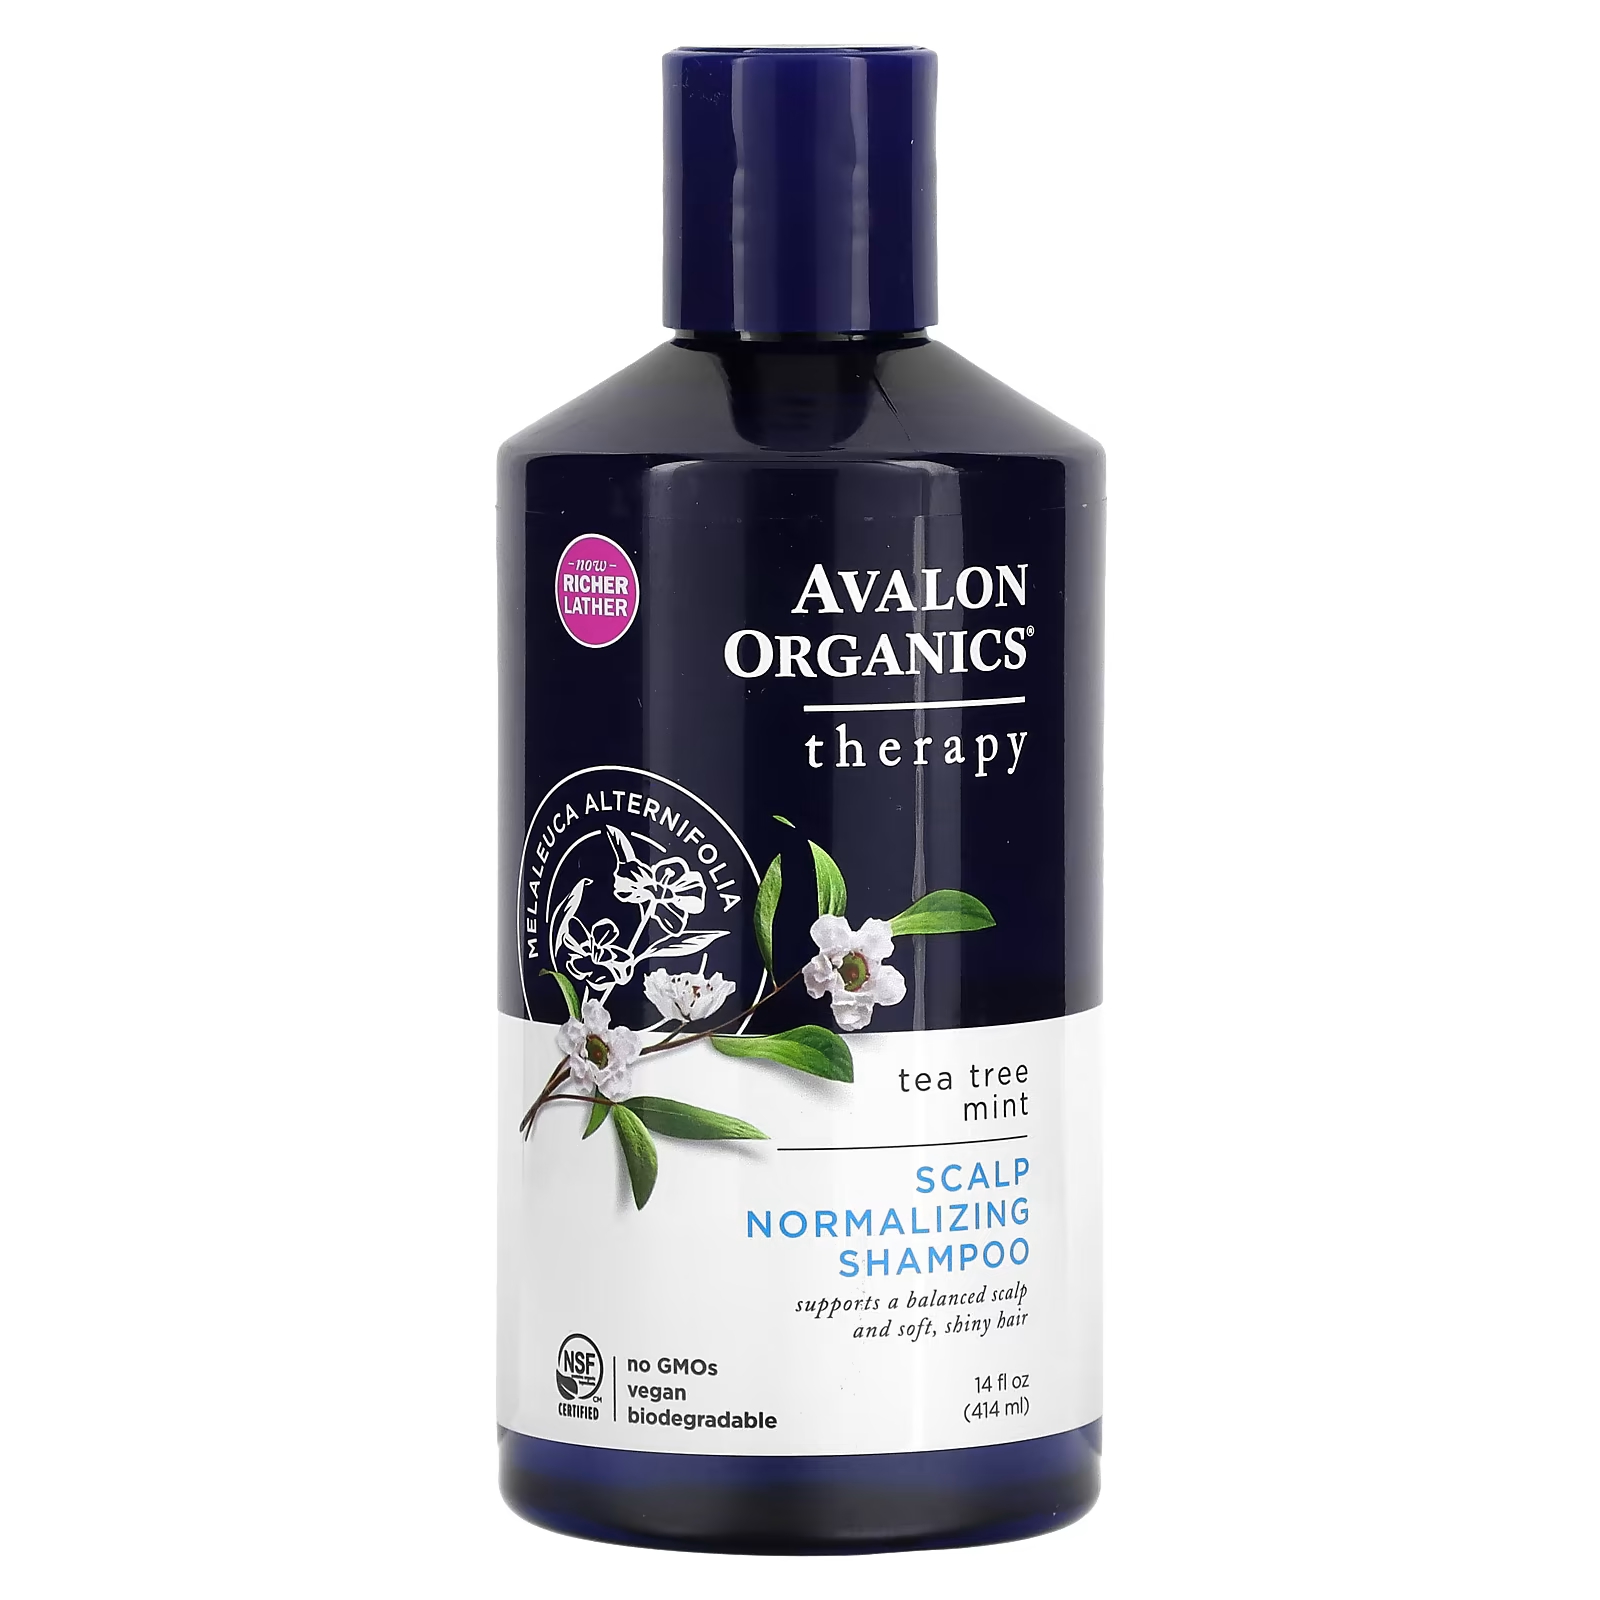 Avalon Organics Therapy Scalp Normalizing Shampoo Tea Tree Mint 14 жидких унций (414 мл)